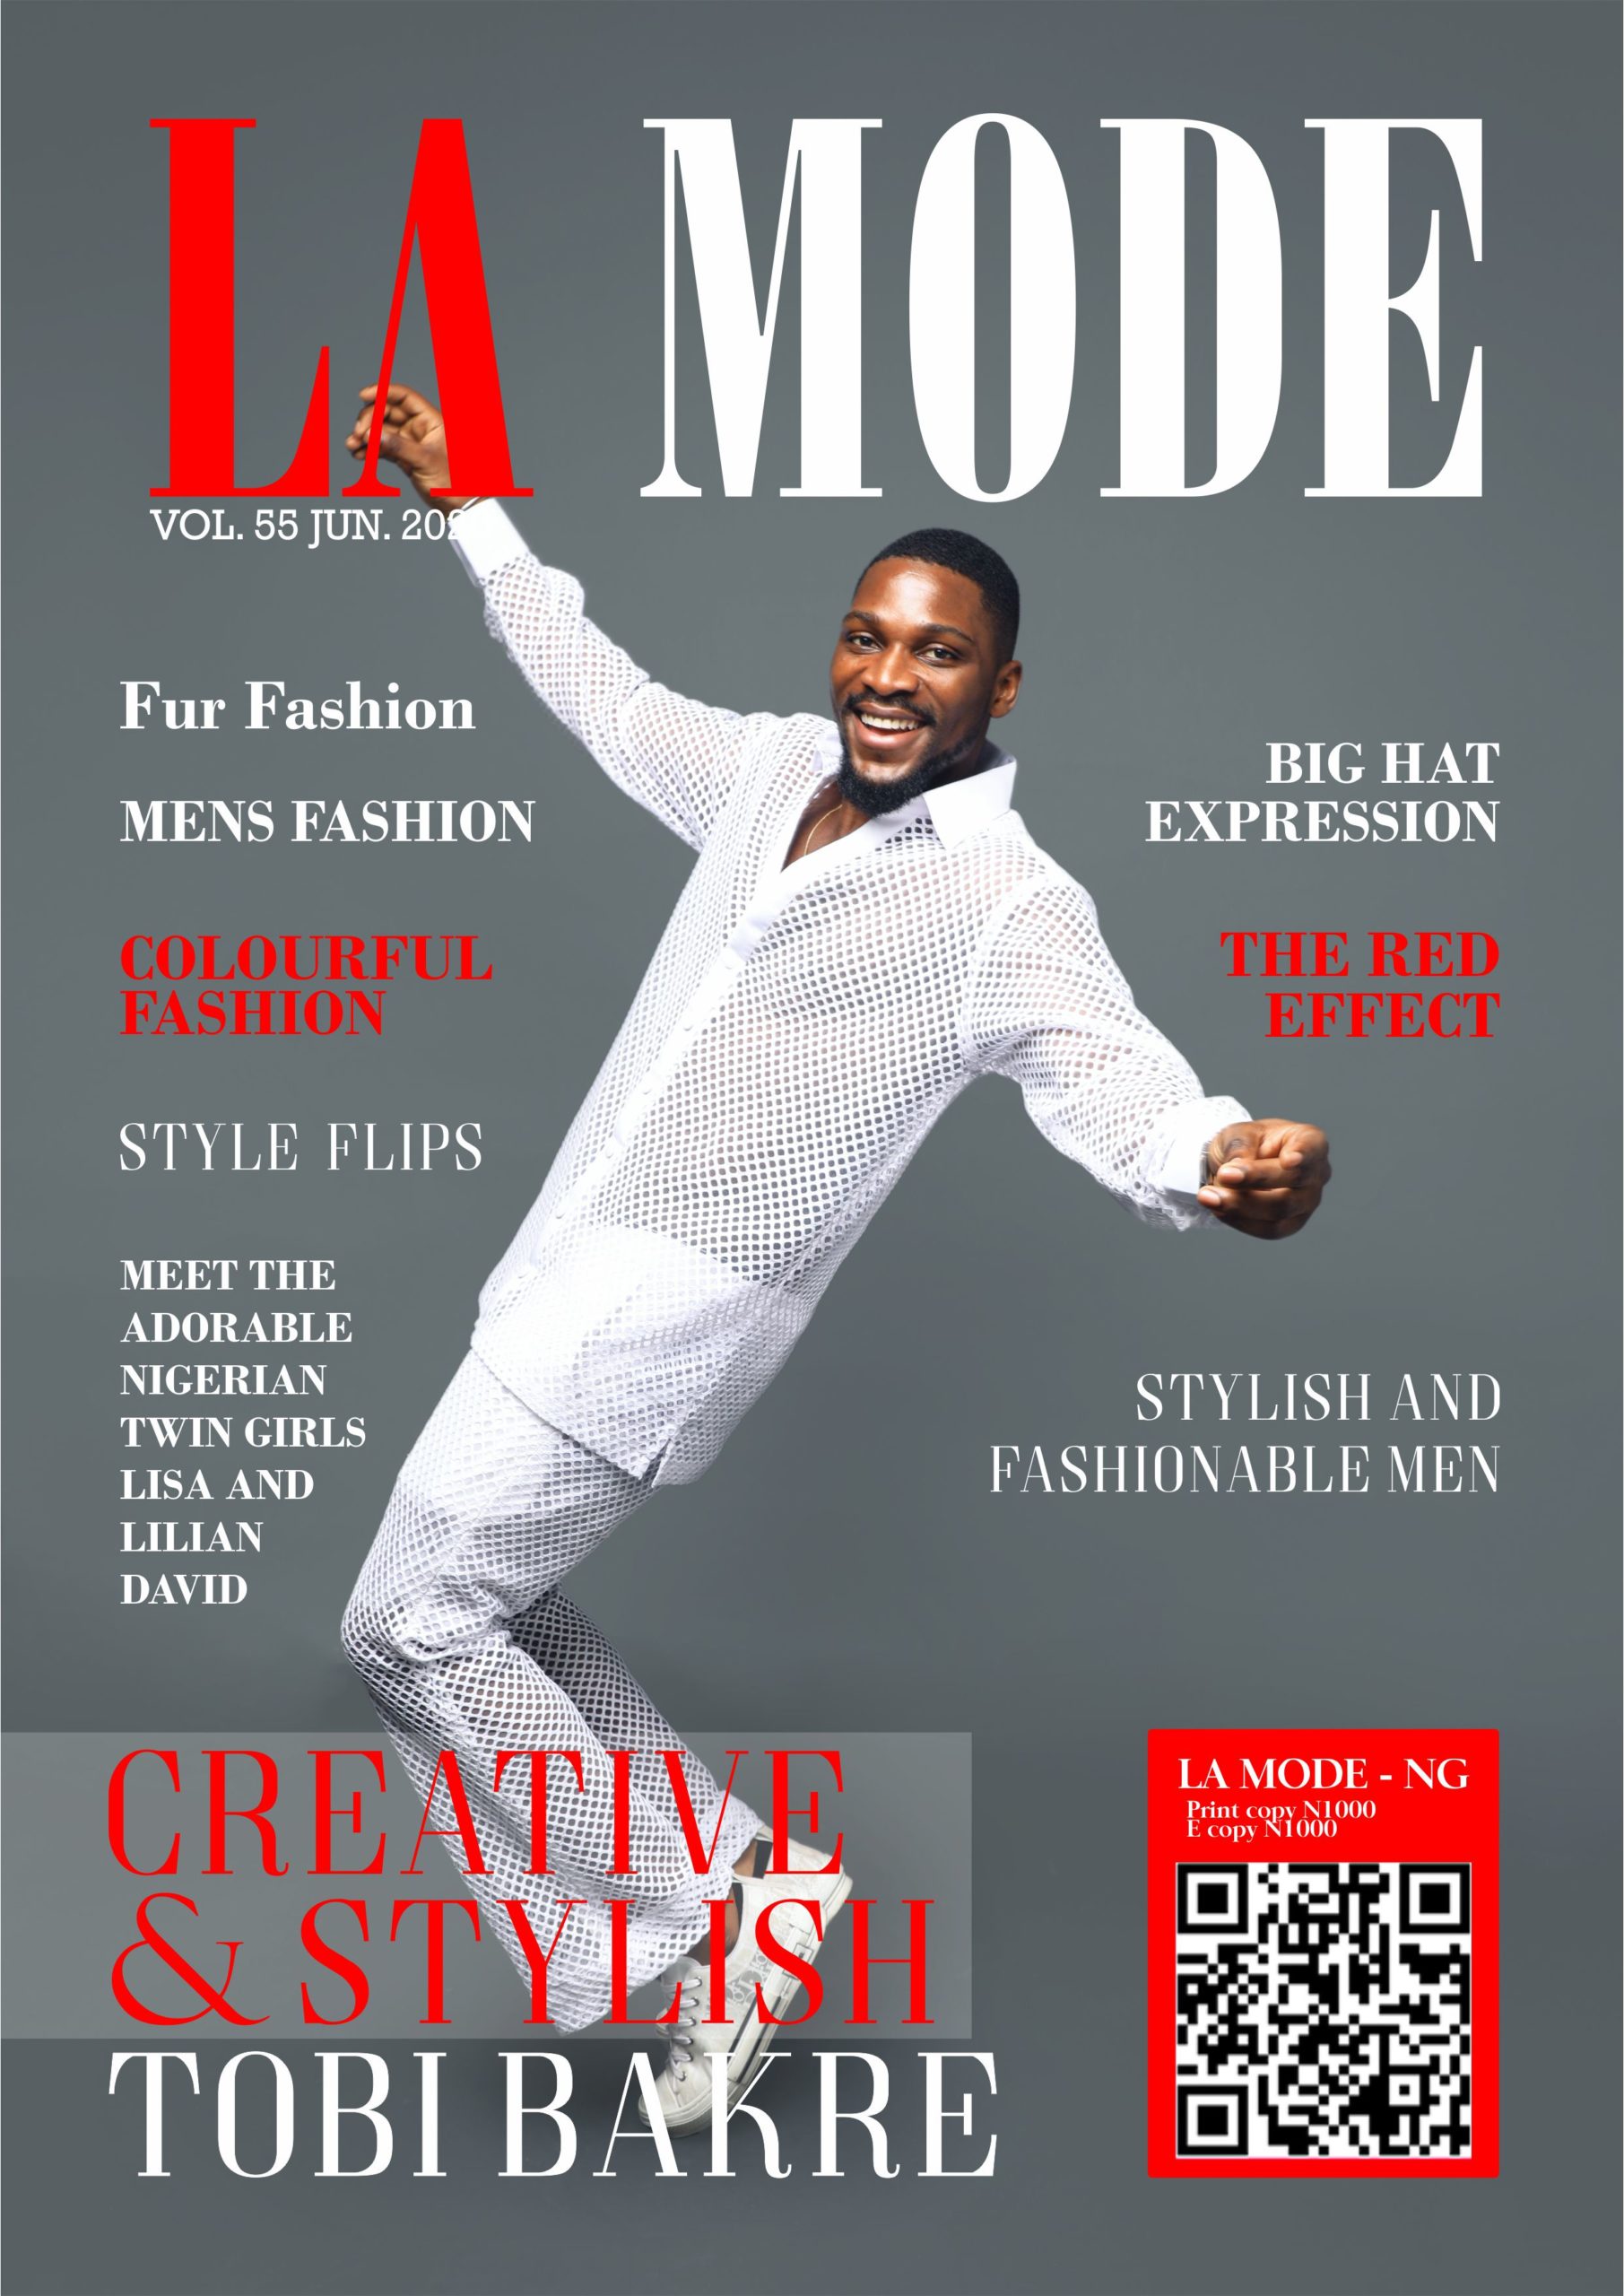 The 55th edition of La Mode Magazine featuring Tobi Bakare.